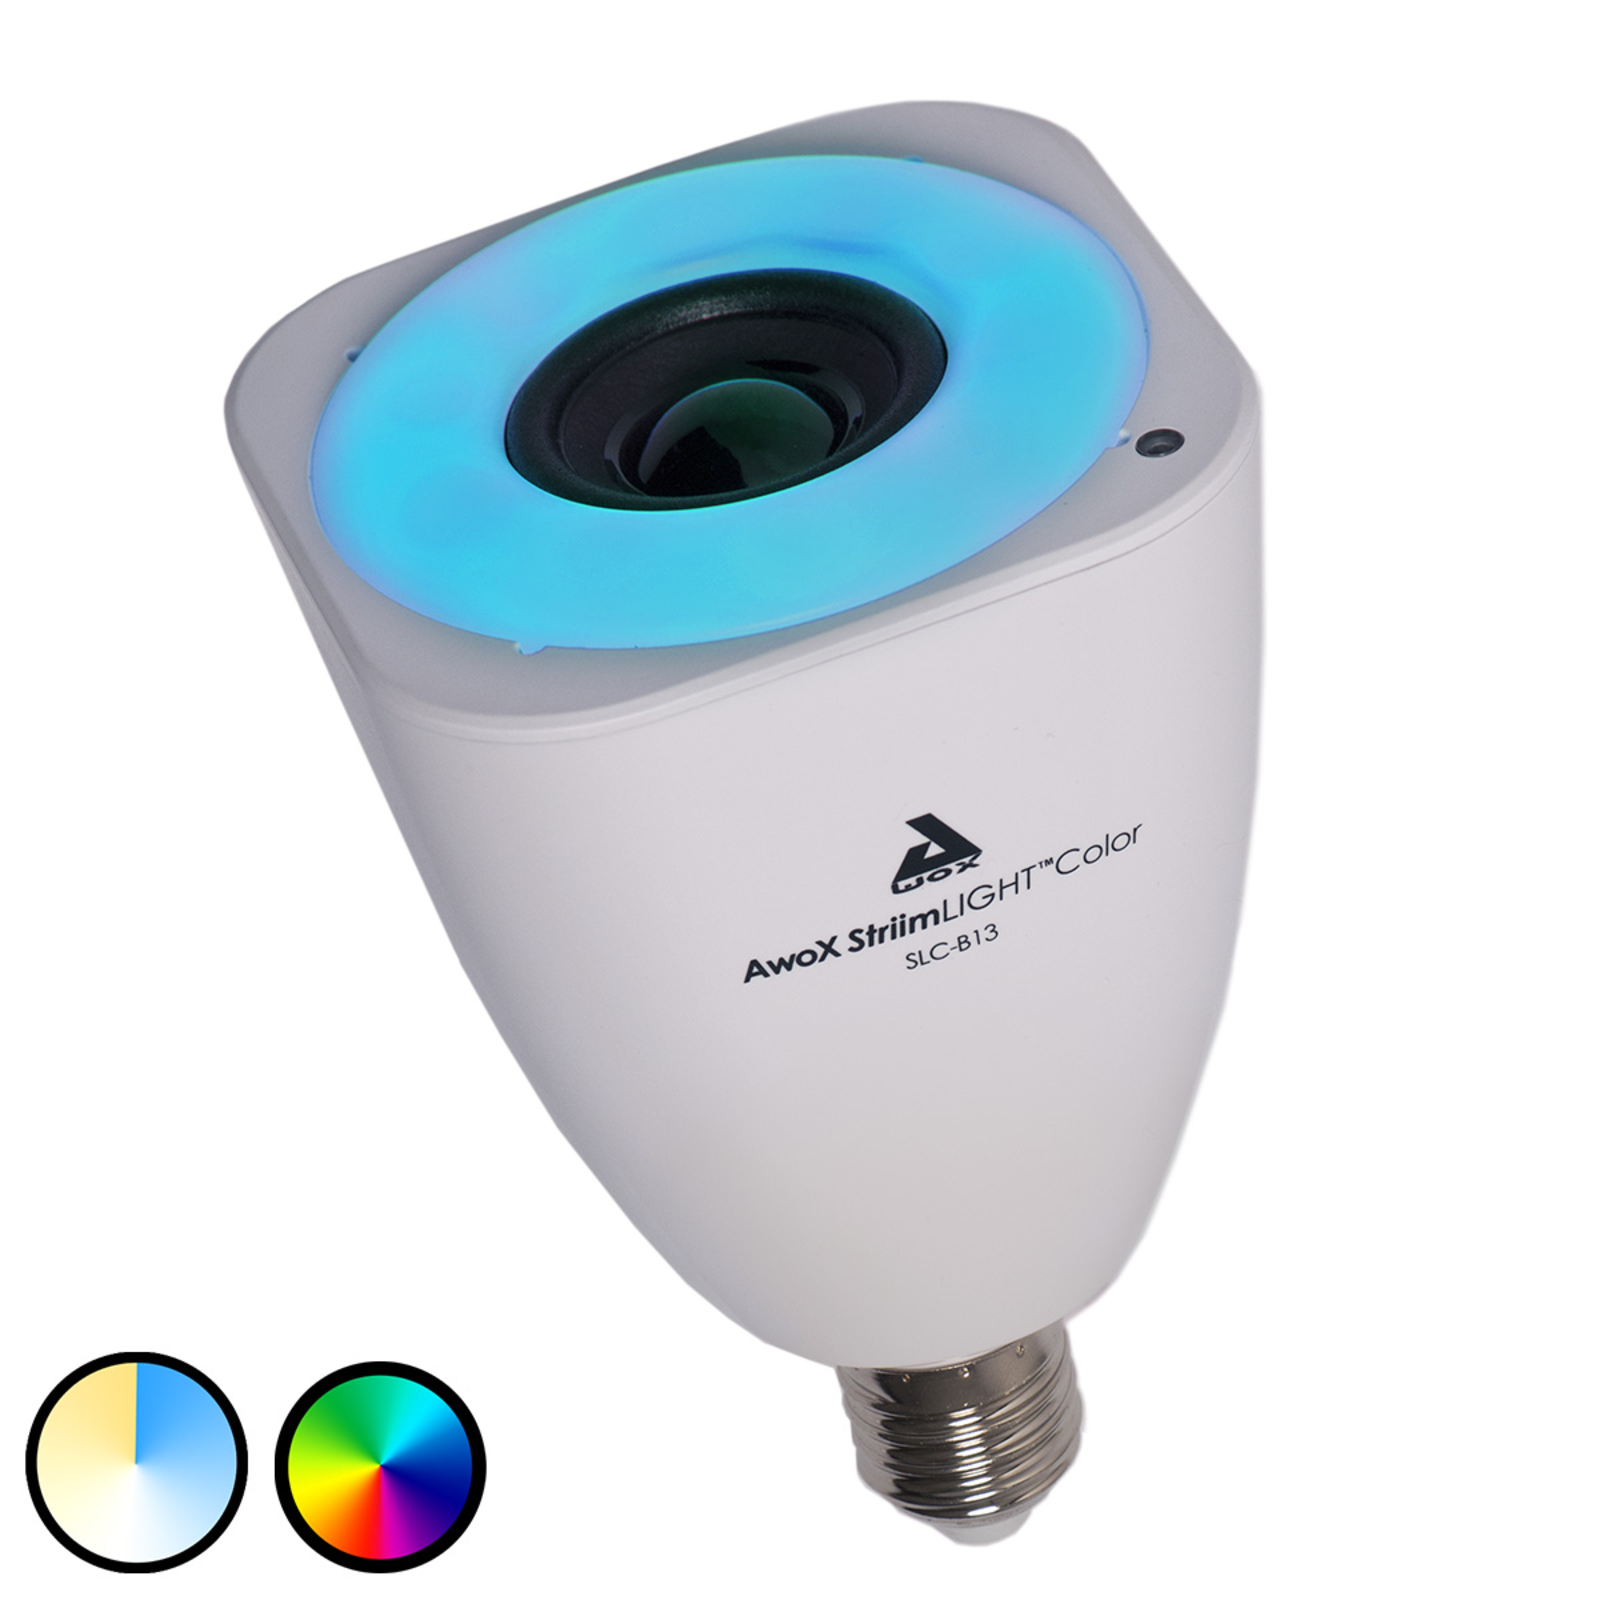 AwoX StriimLIGHT Barvna LED svetilka E27, Bluetooth